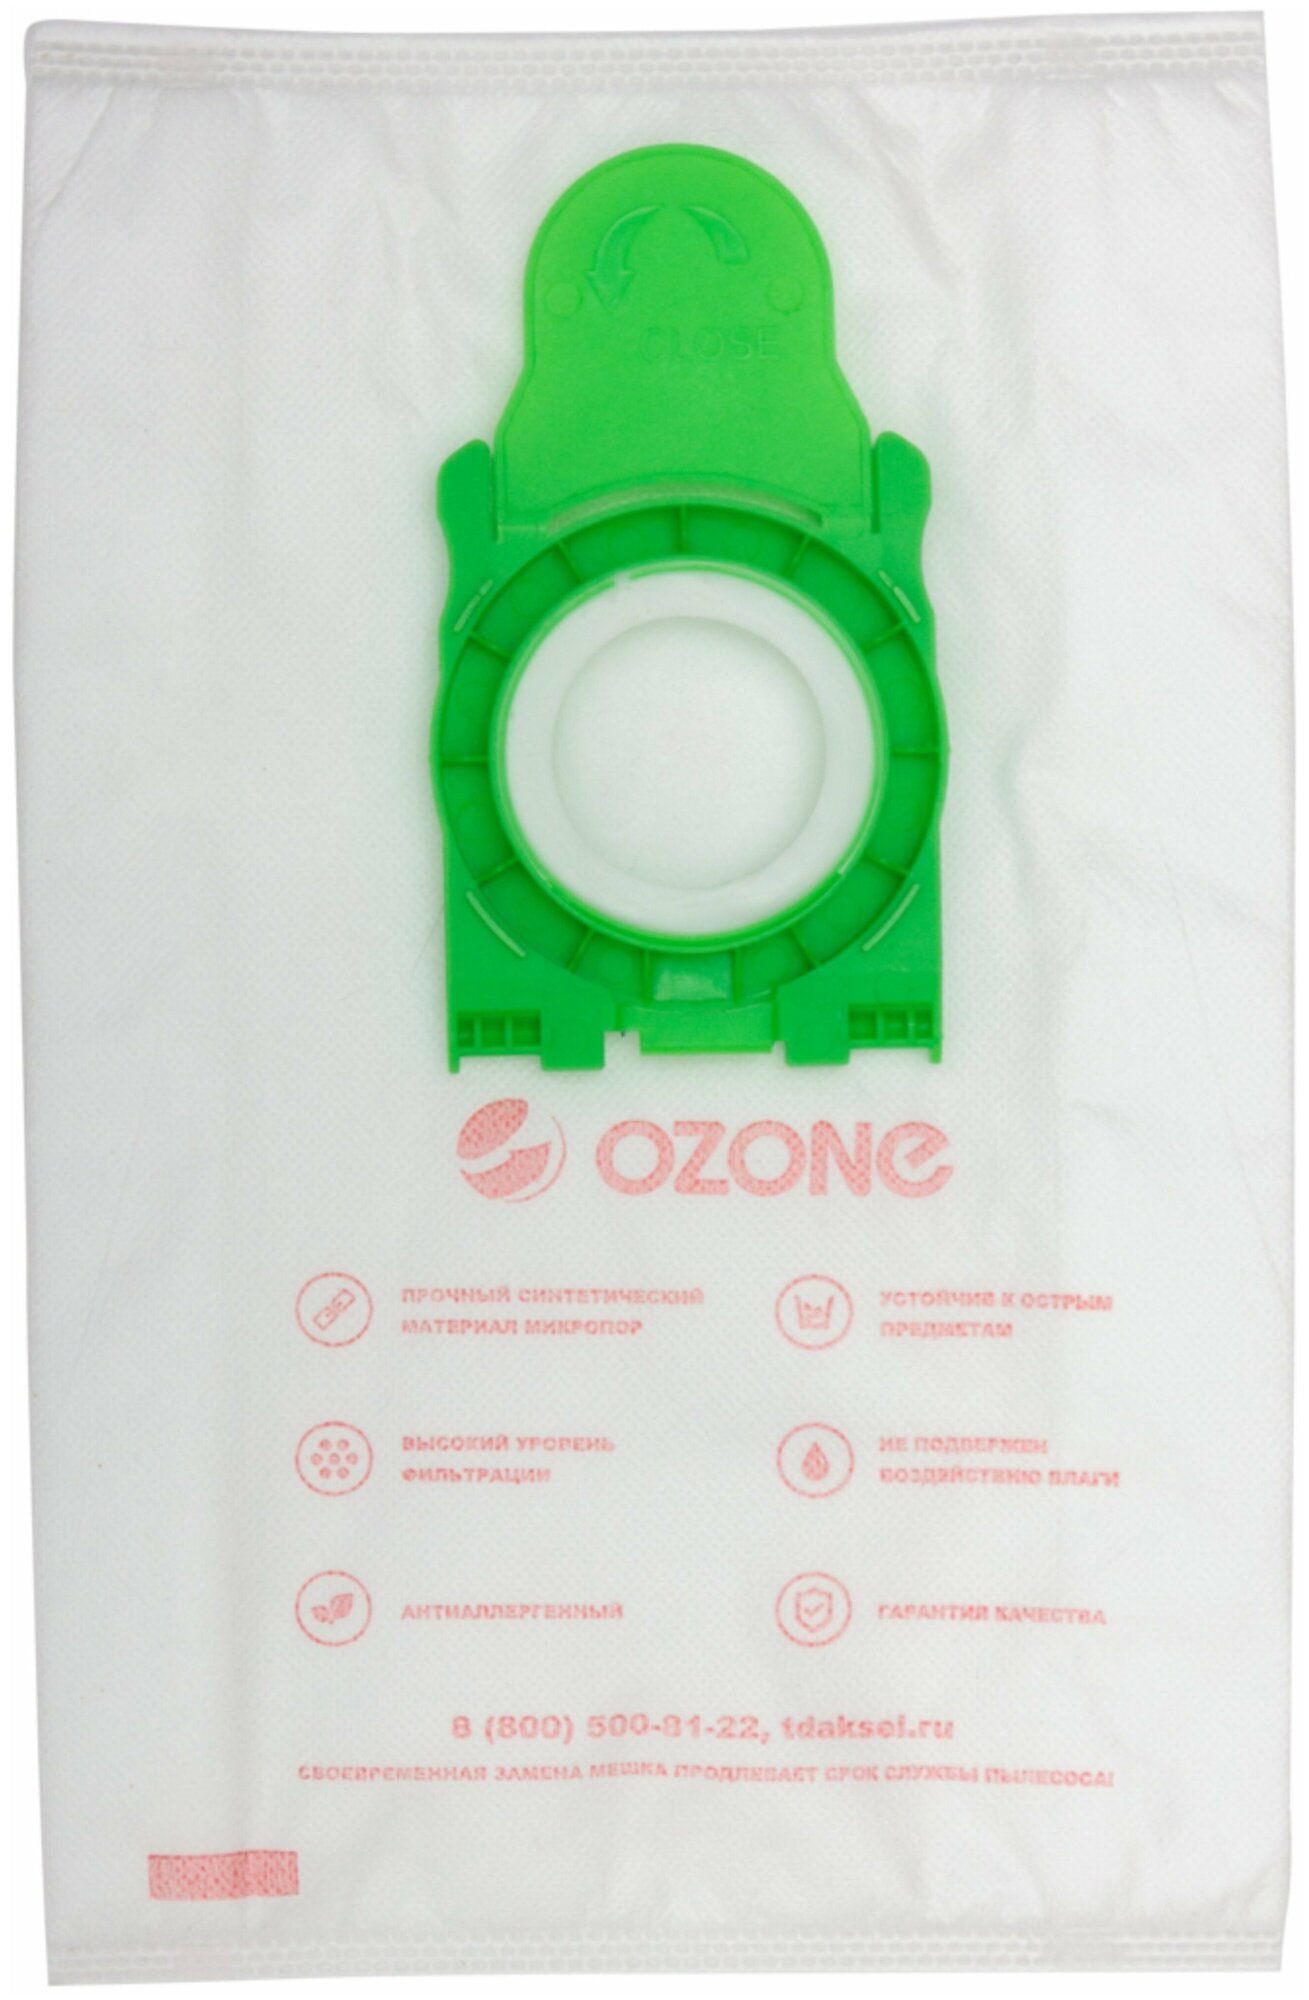 Мешки-пылесборники Ozone - фото №2